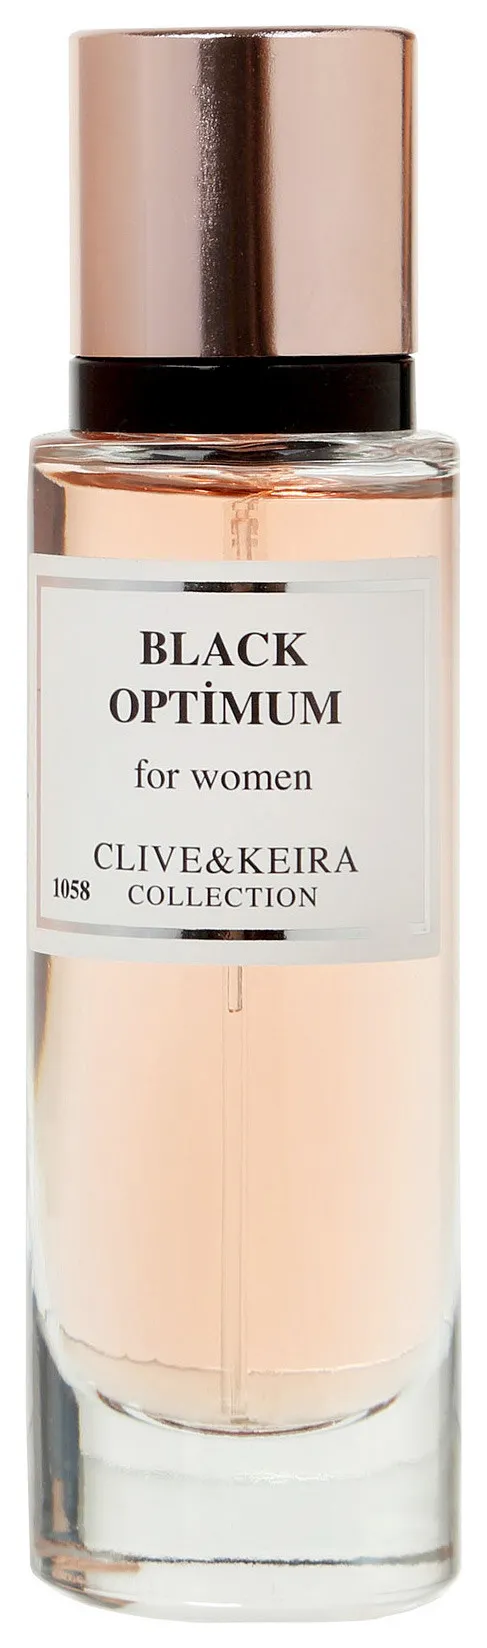 Парфюмерная вода Clive Keira 1058 Black Opium Yves Saint Laurent, для женщин, 30 мл#4